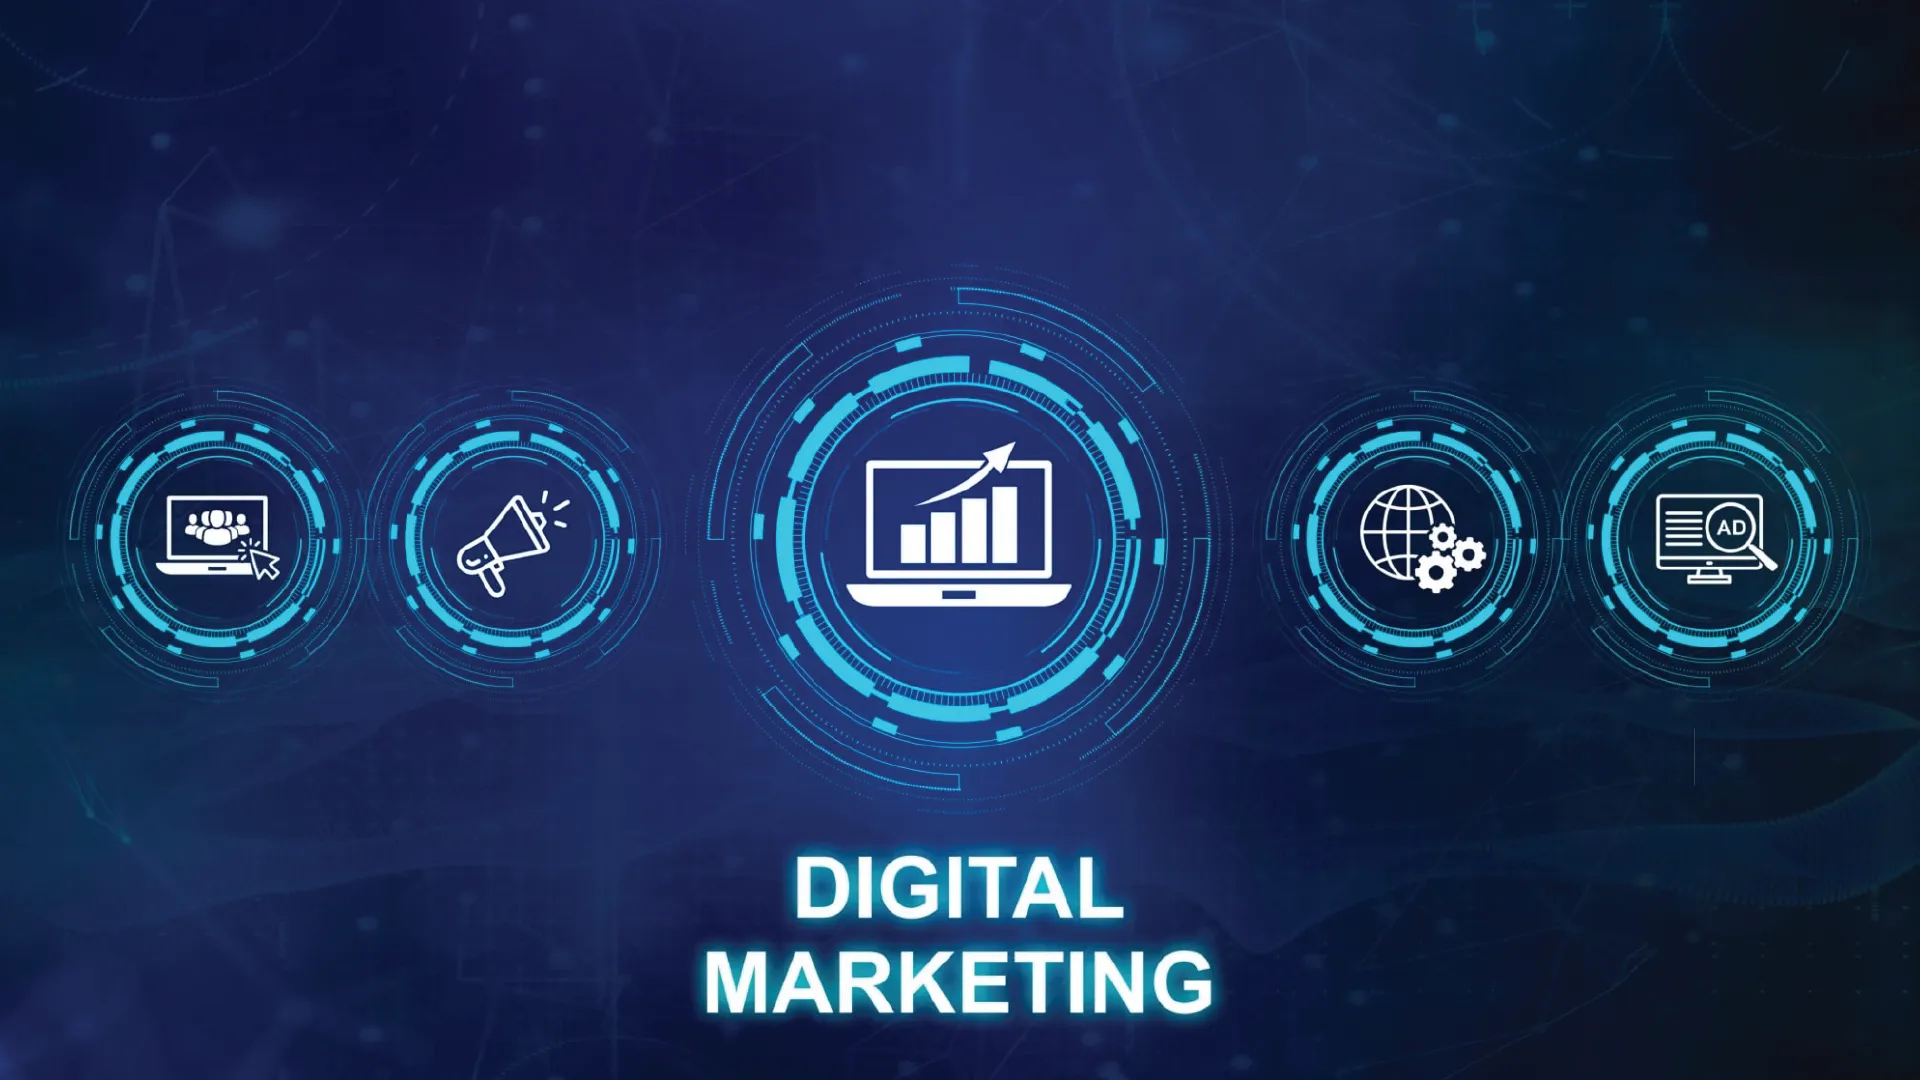 An illustration of the aspect of digital marketing